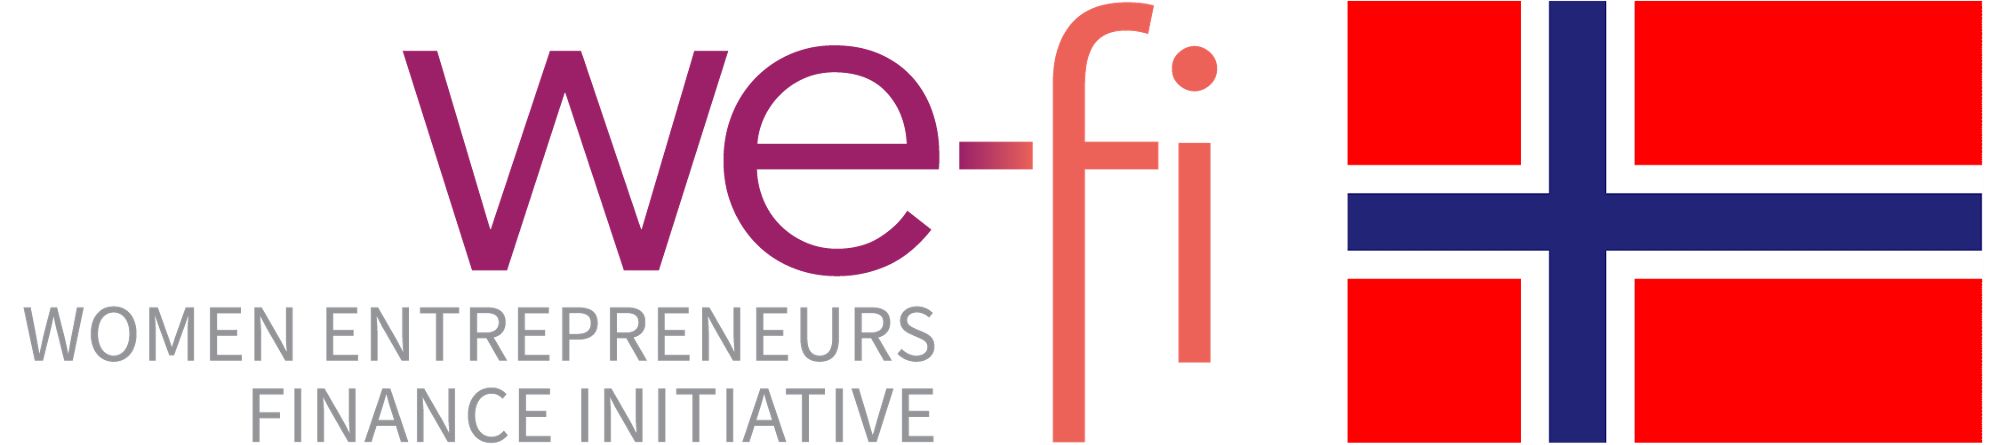 IFC We-Fi program logo and flag of Norway.